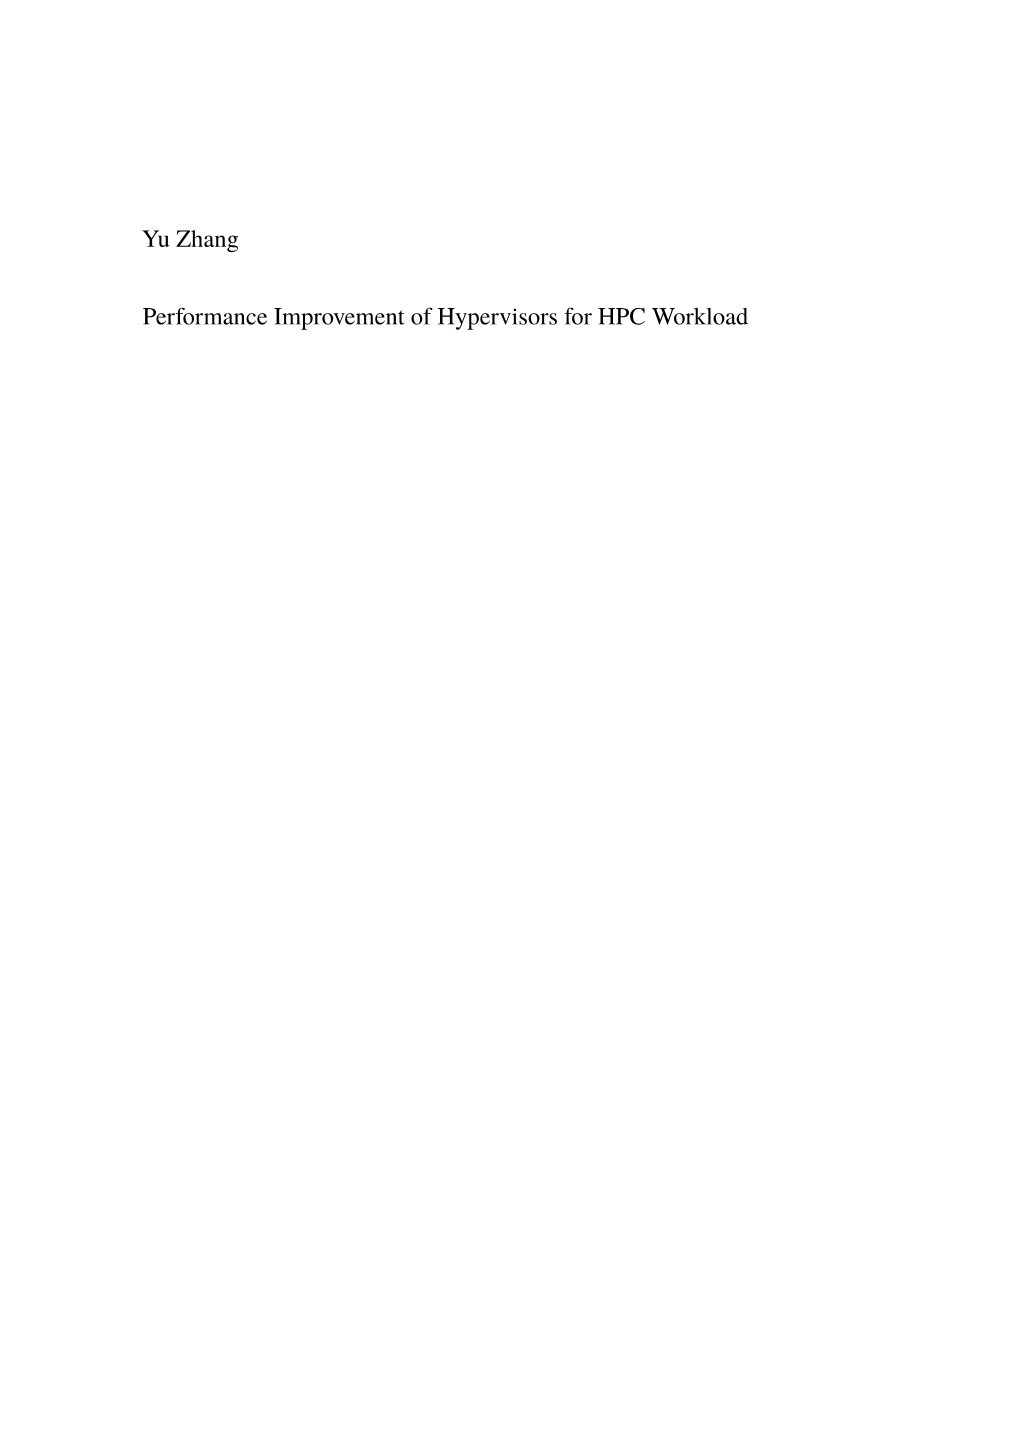 Yu Zhang Performance Improvement of Hypervisors for HPC Workload